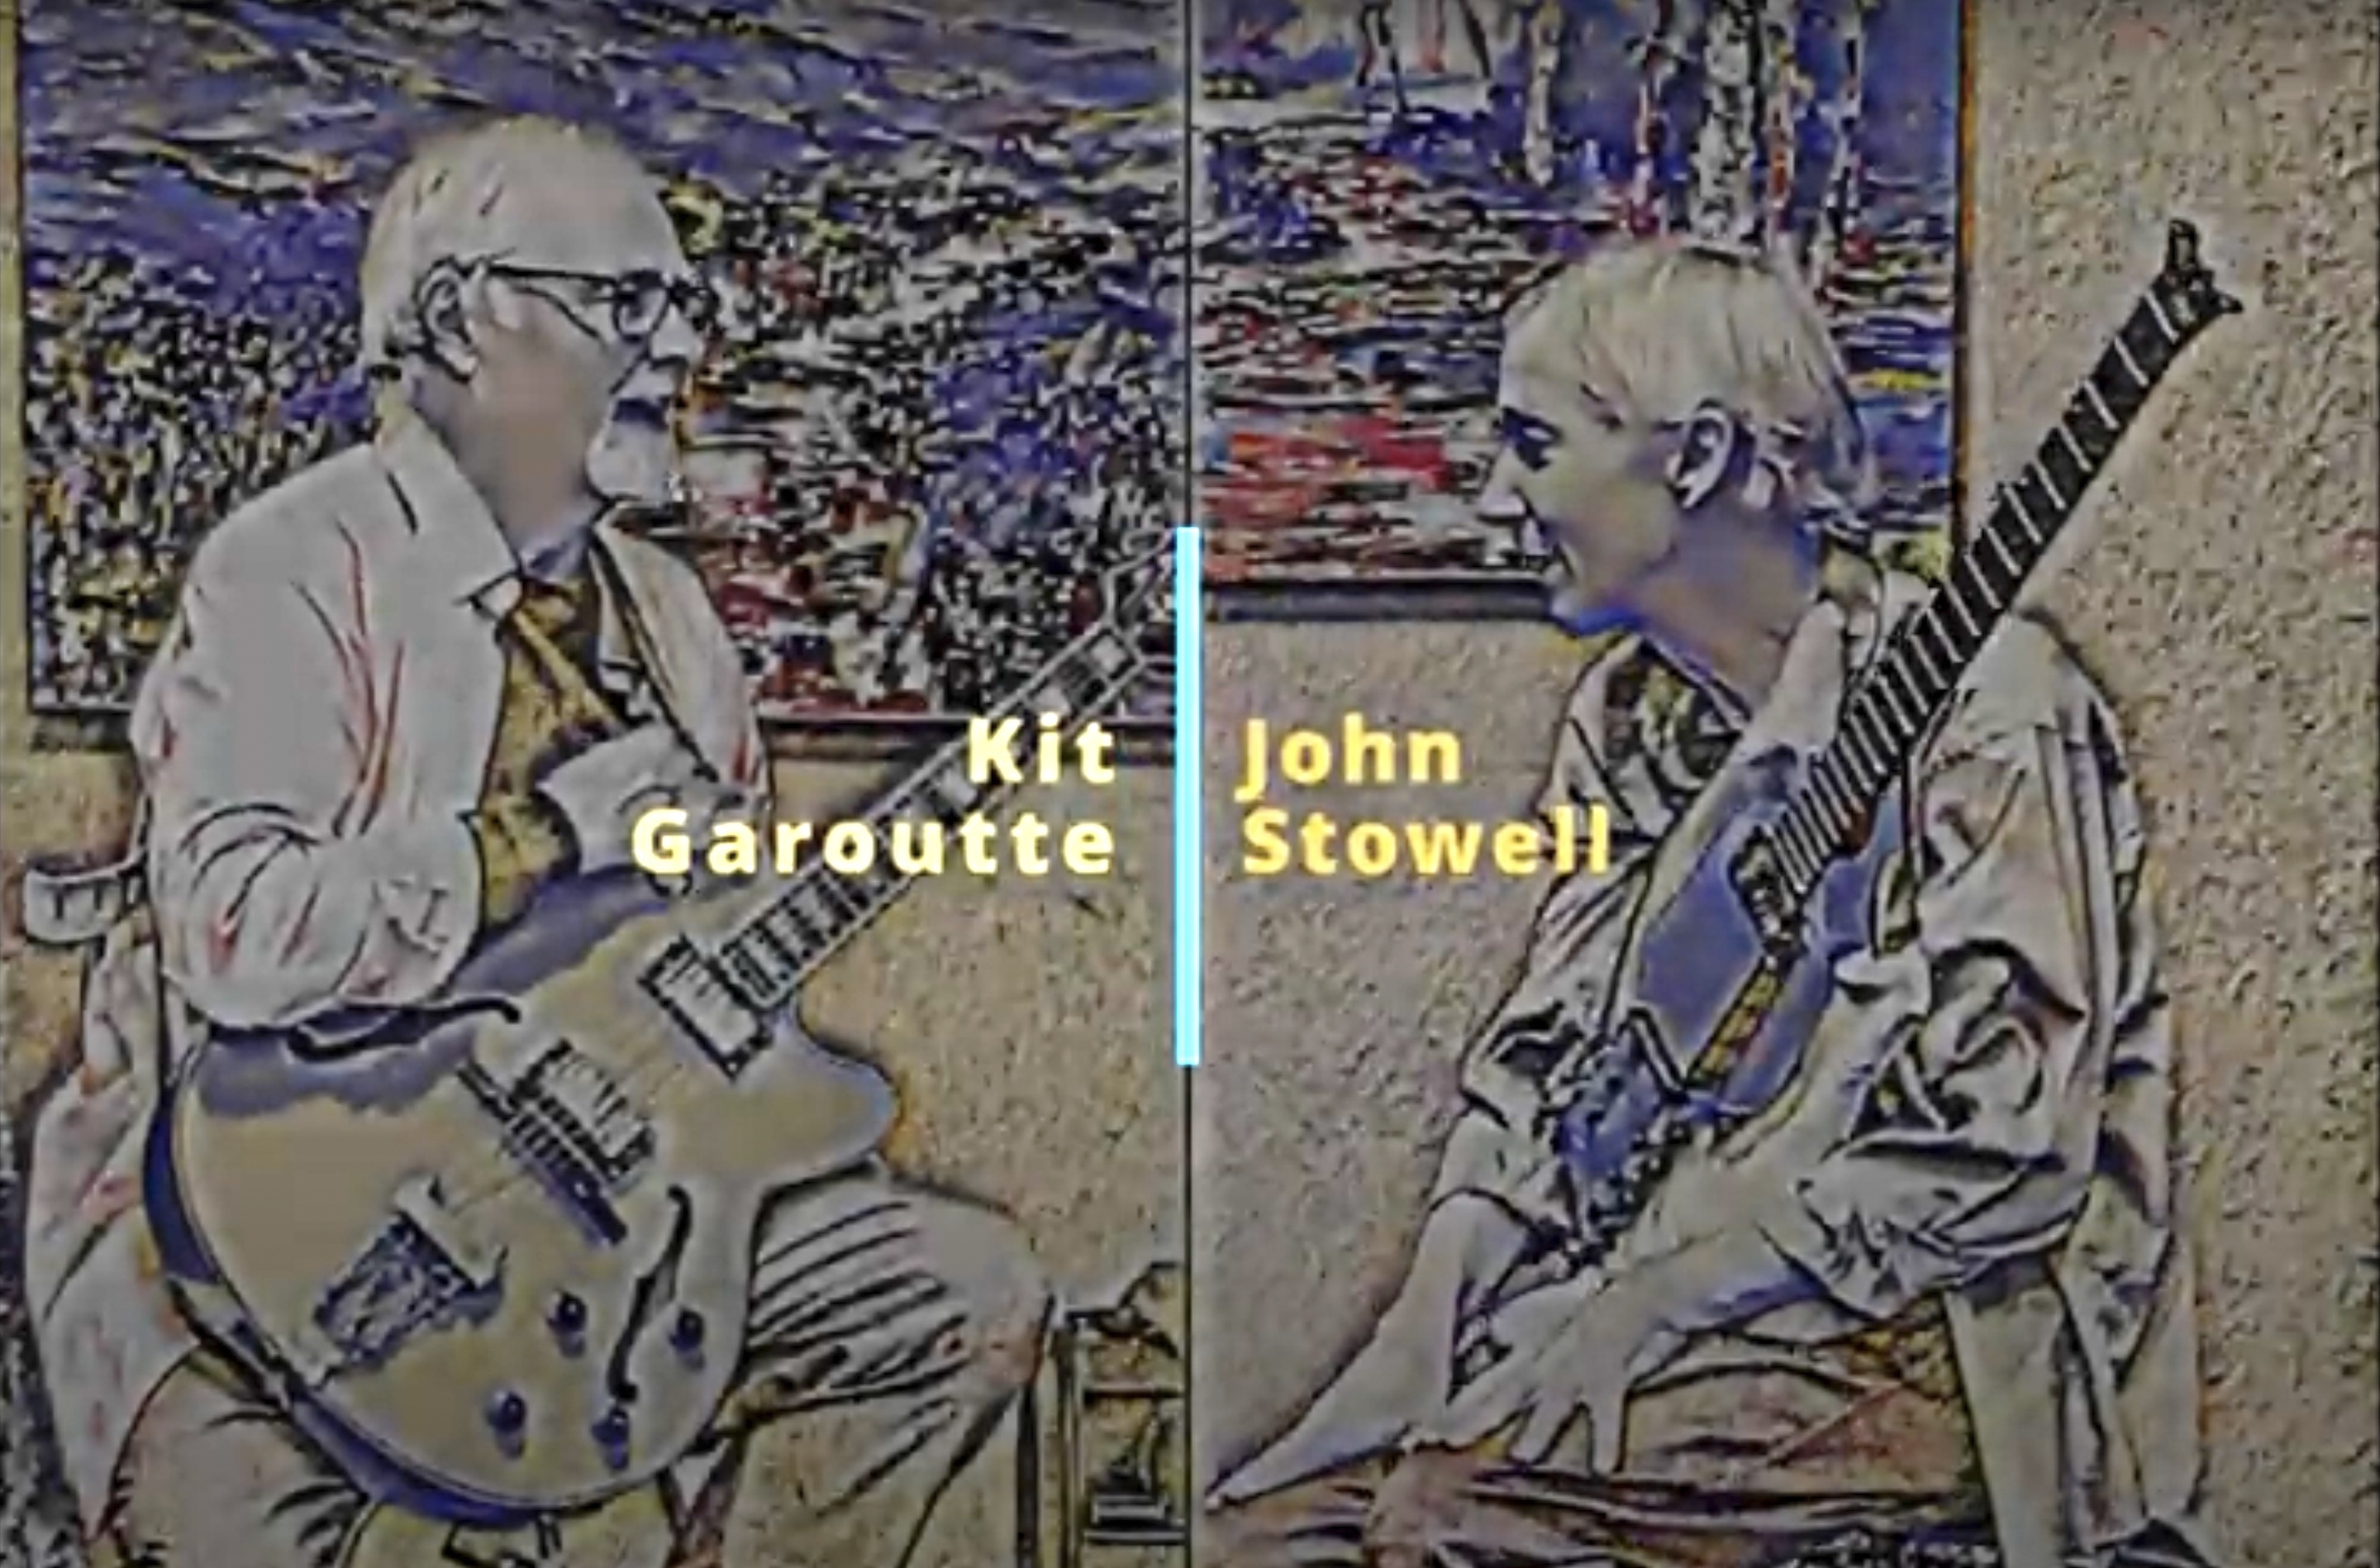 Kit Garoutte & John Stowell "art" image from an Attic Gallery show.